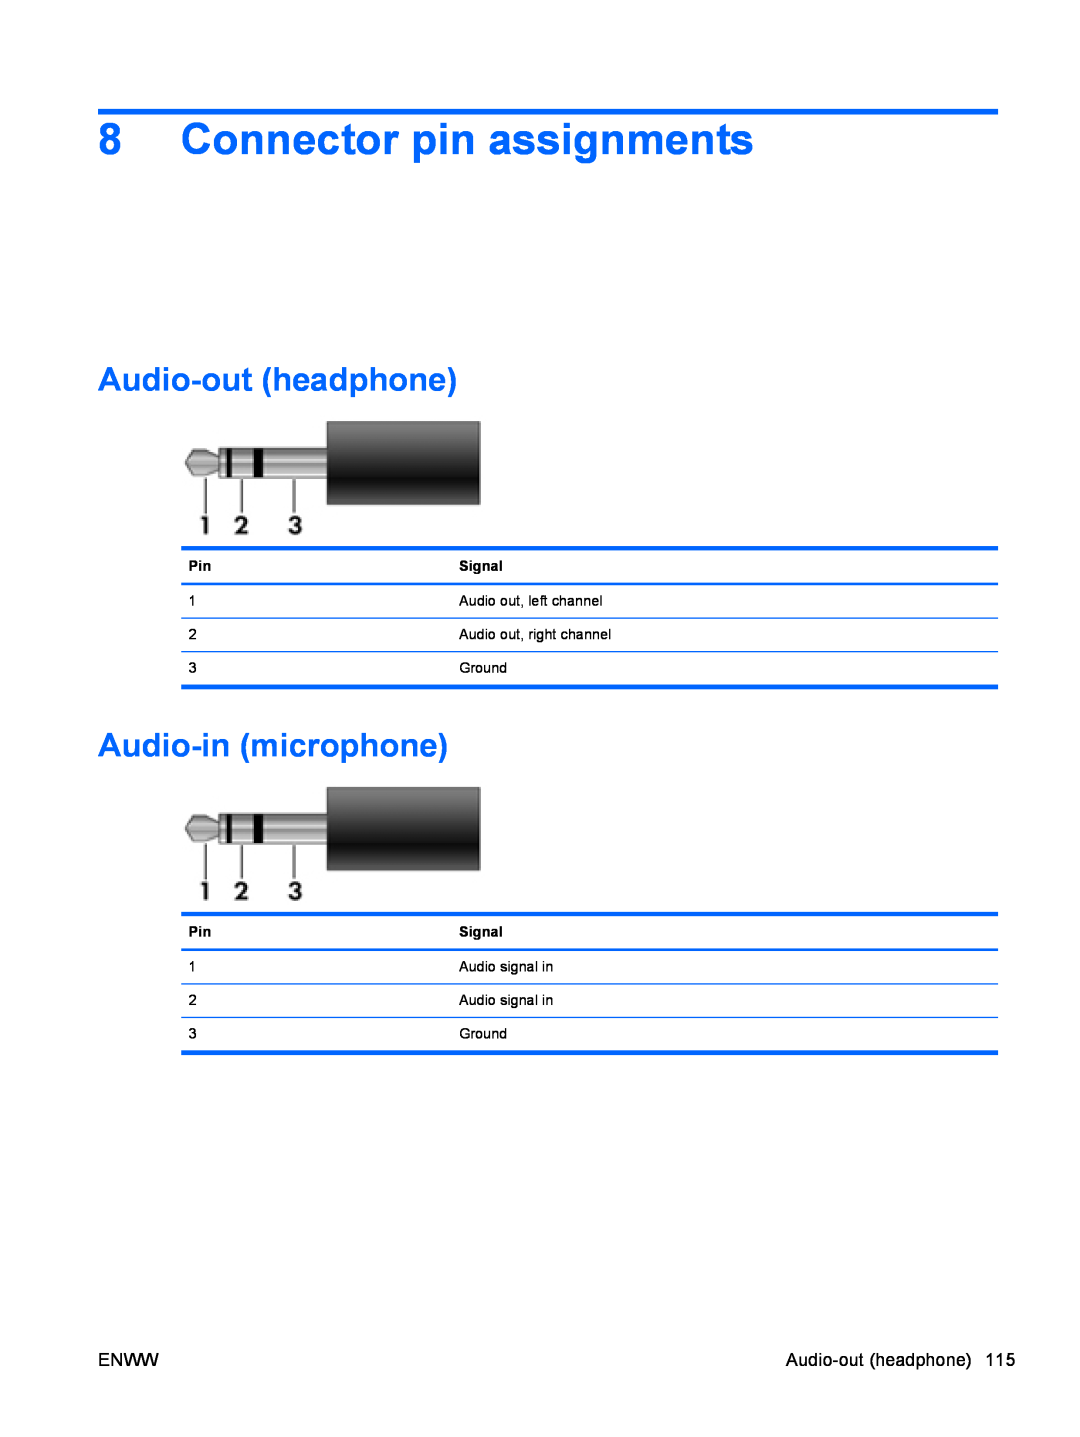 HP CQ62-202AU, CQ62-238DX, CQ62-231NR, CQ62-225NR manual Connector pin assignments, Audio-out headphone, Audio-in microphone 